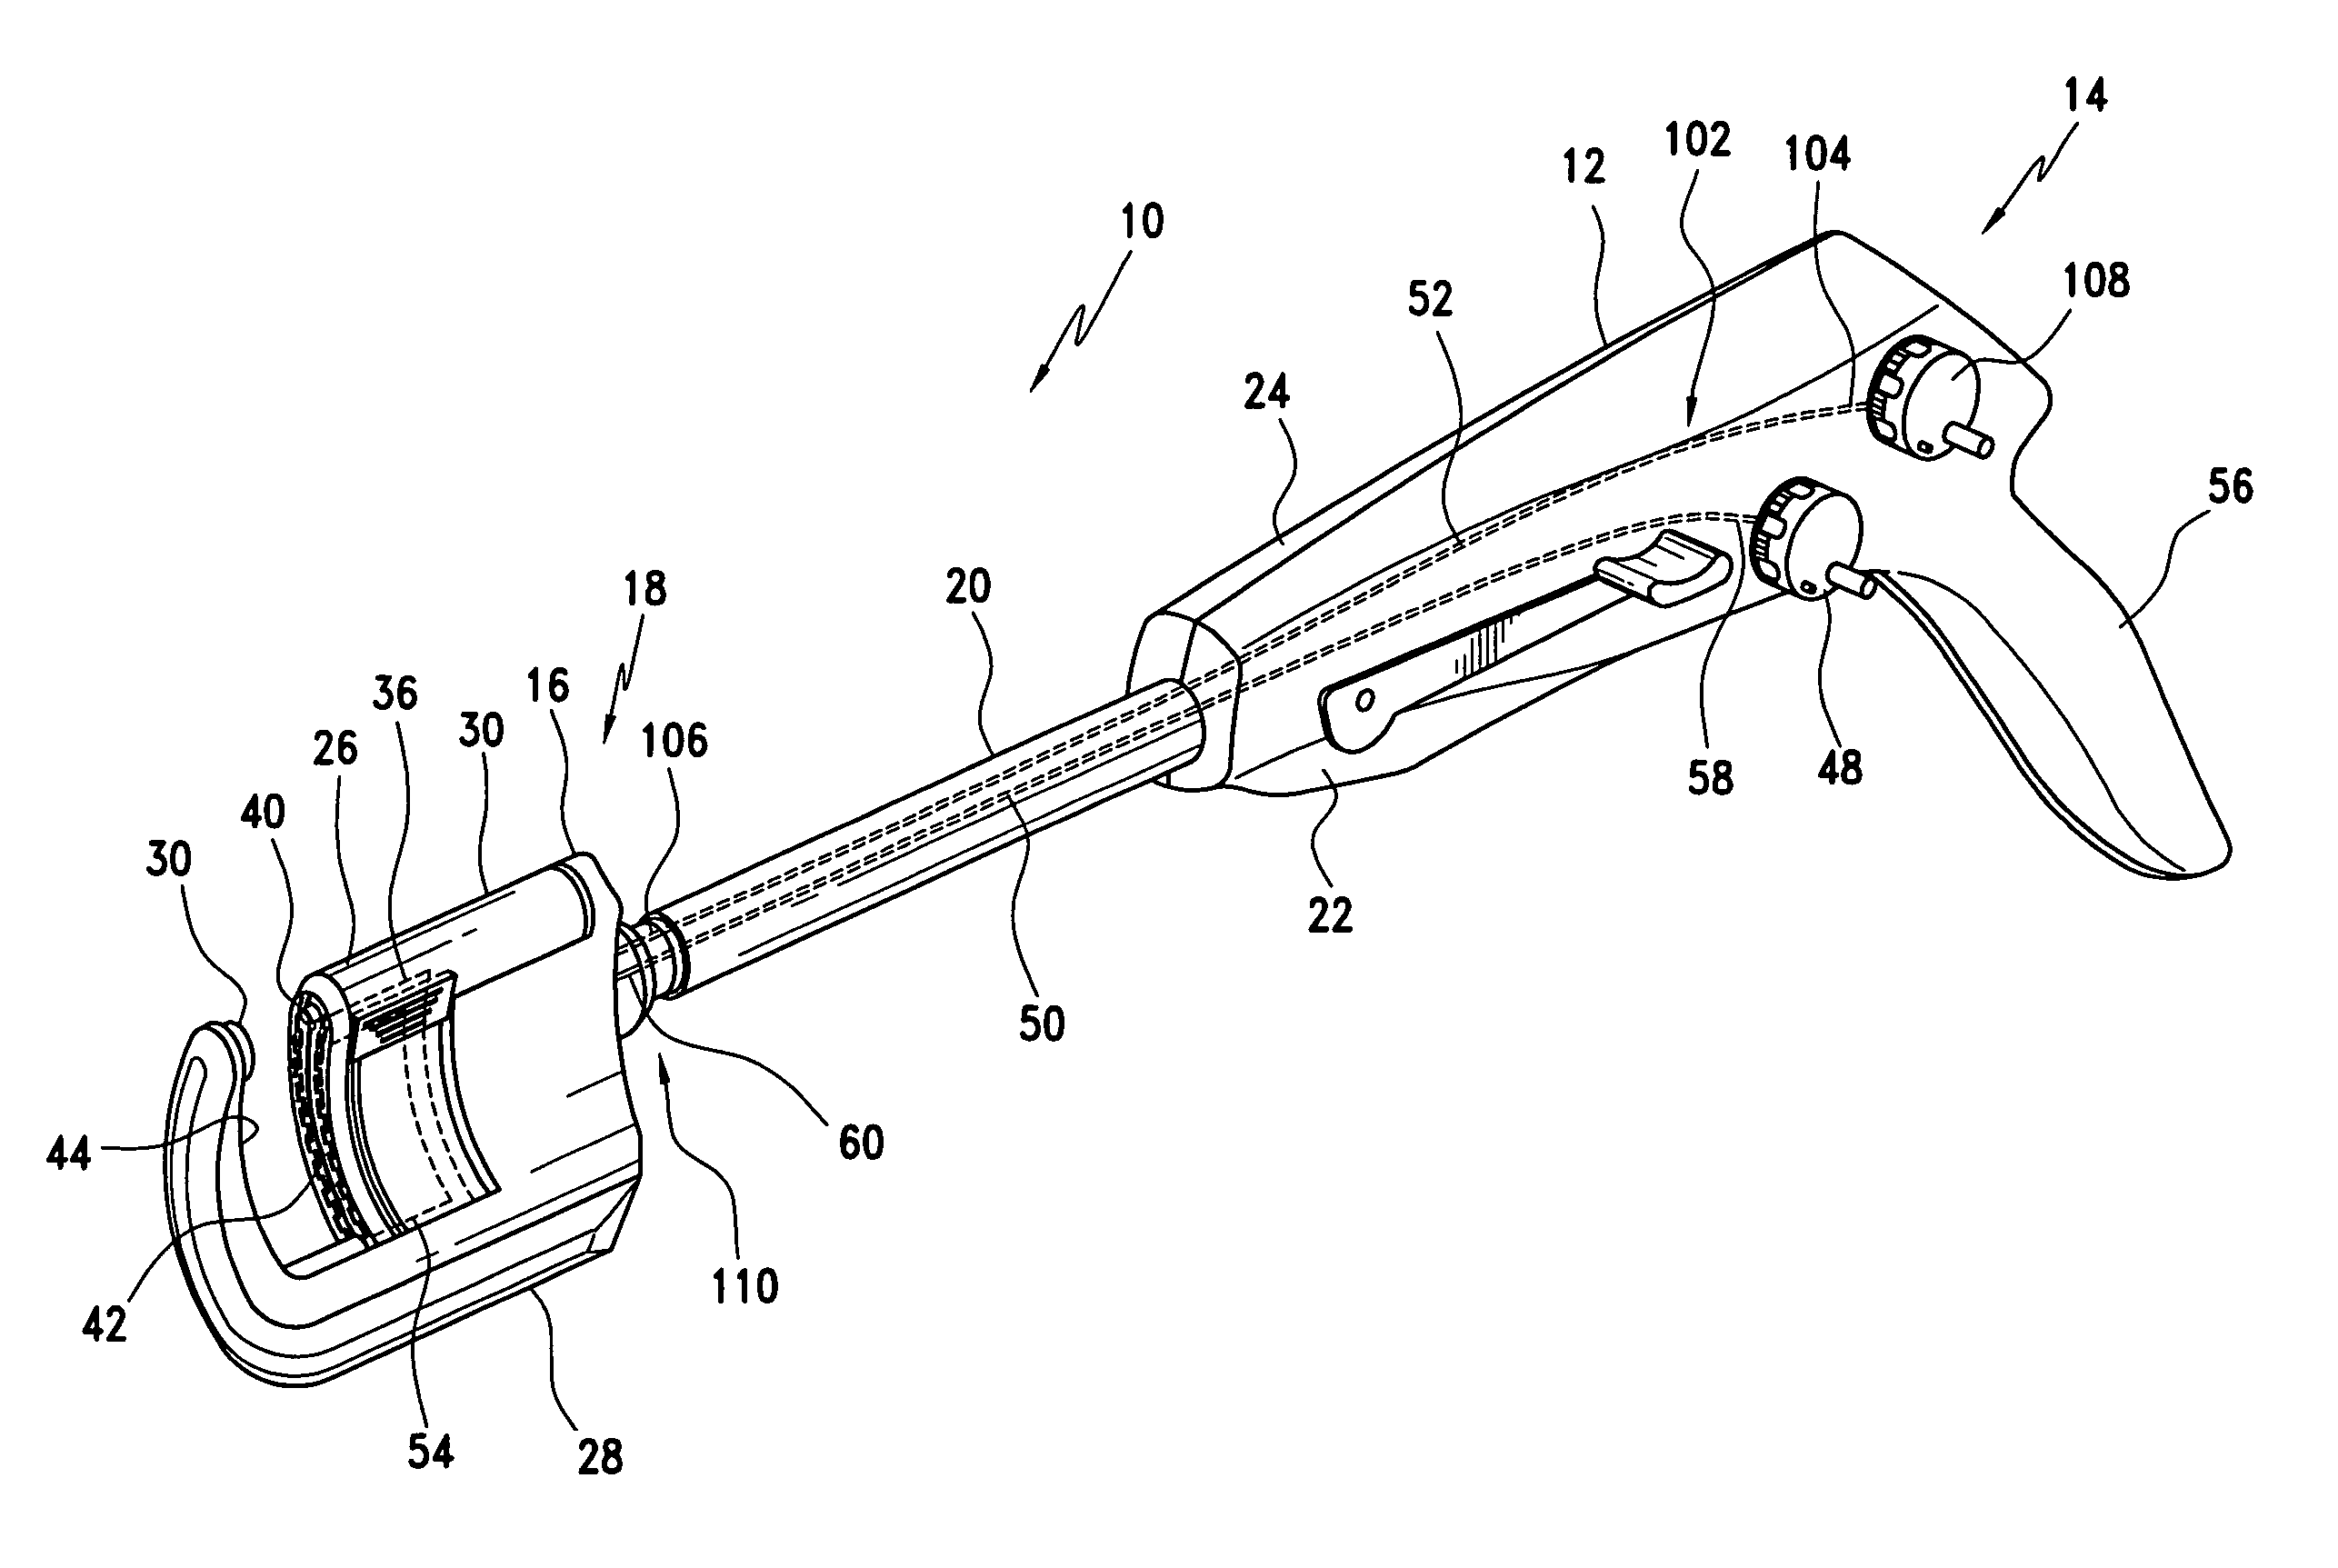 Articulating curved cutter stapler